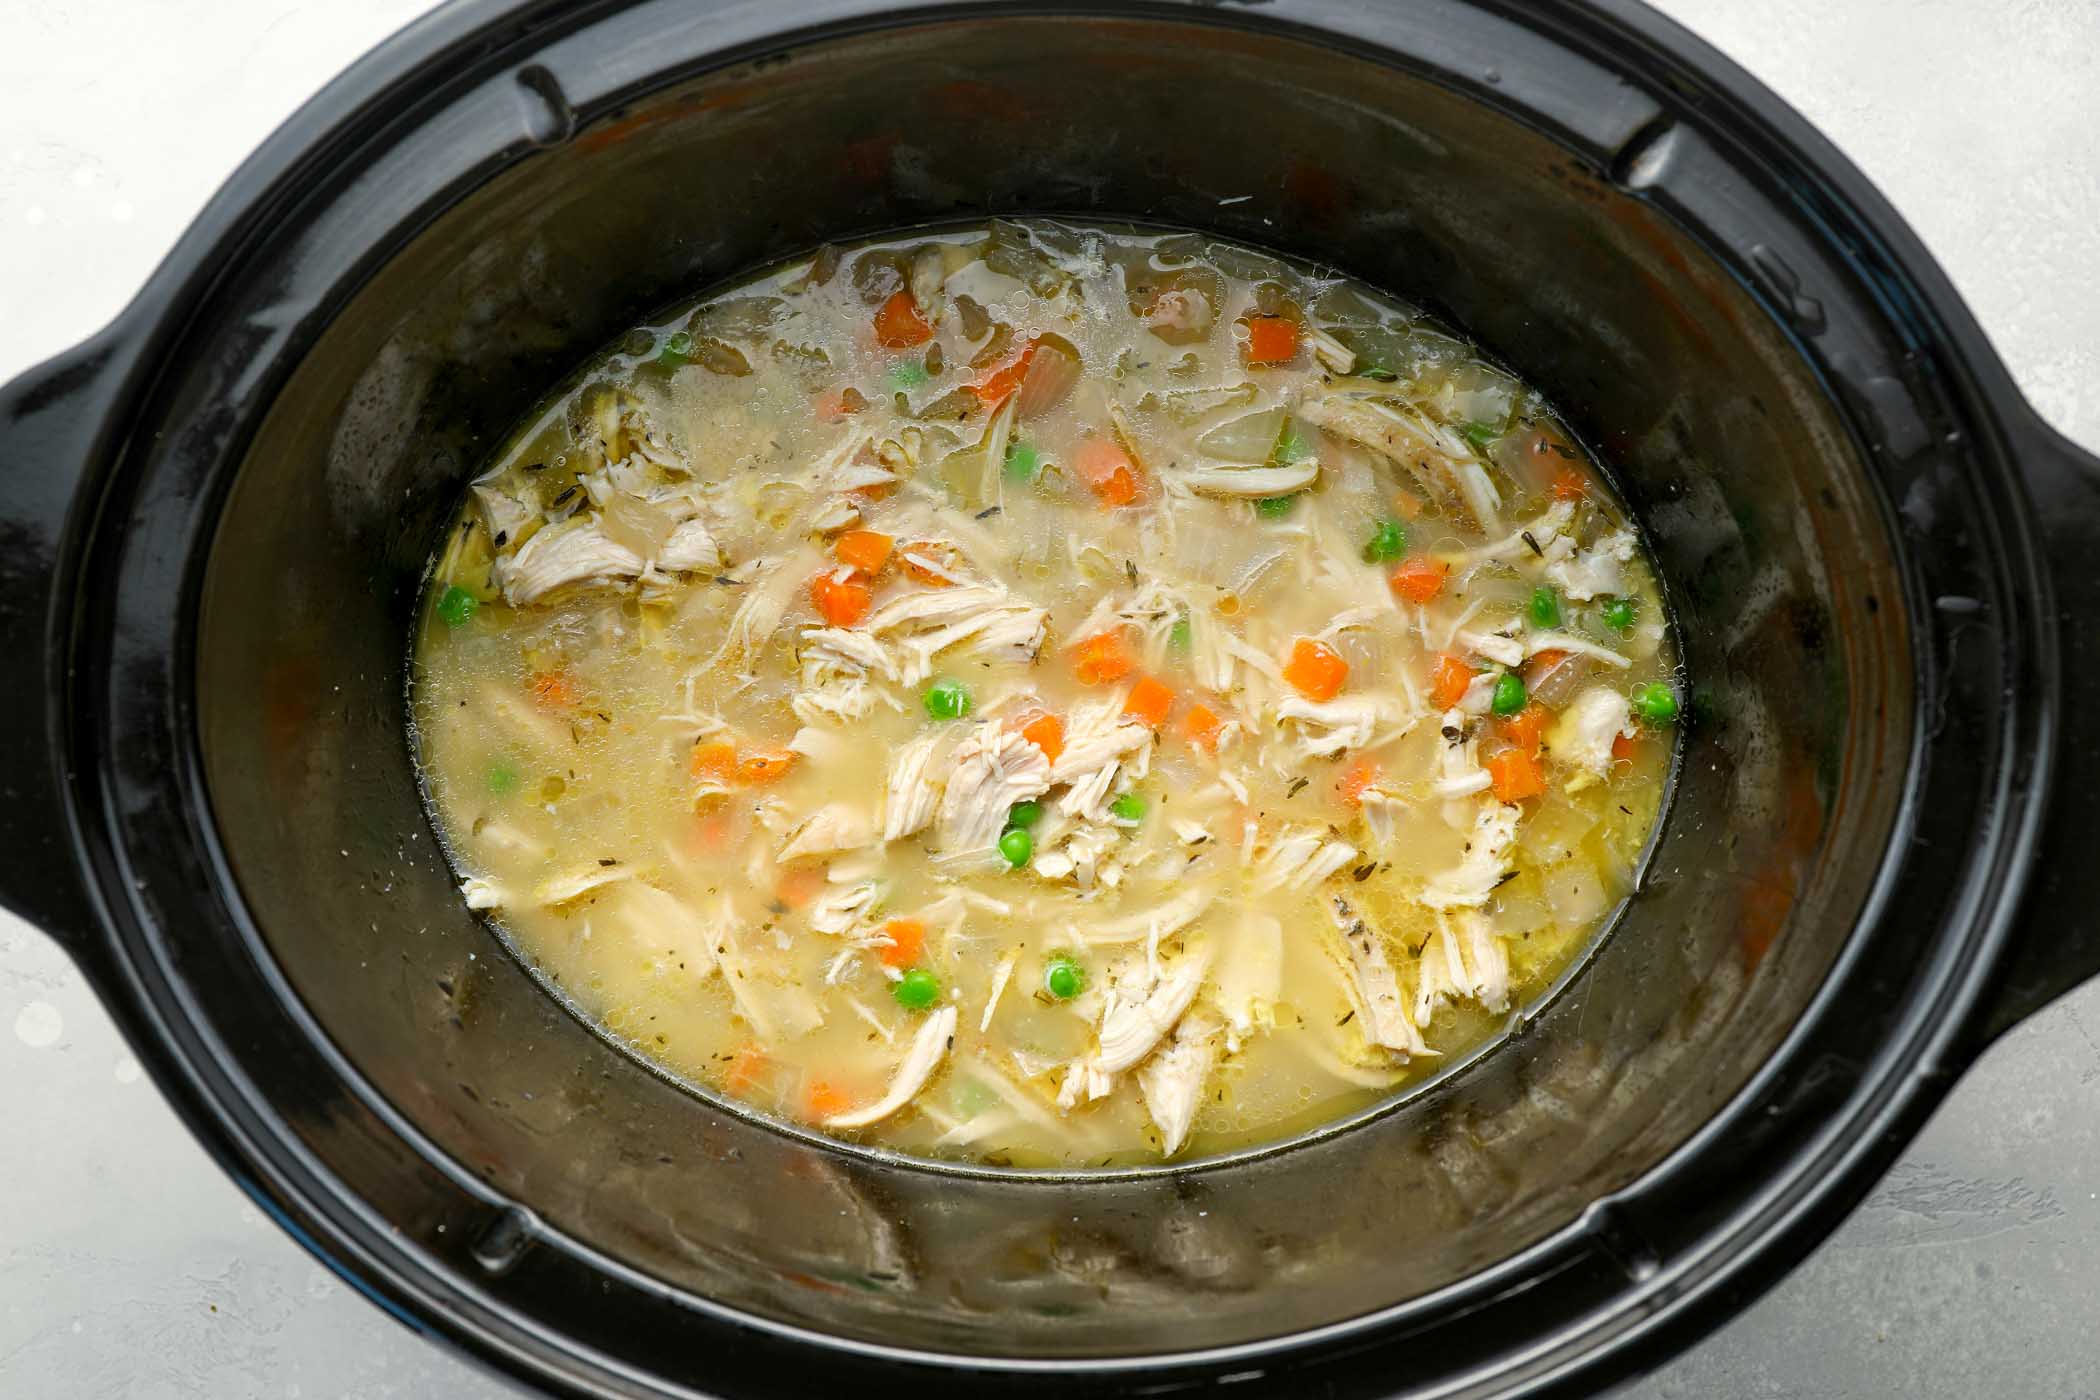 Shredded chicken, frozen vegetables and cornstarch slurry stirred into slow cooker.